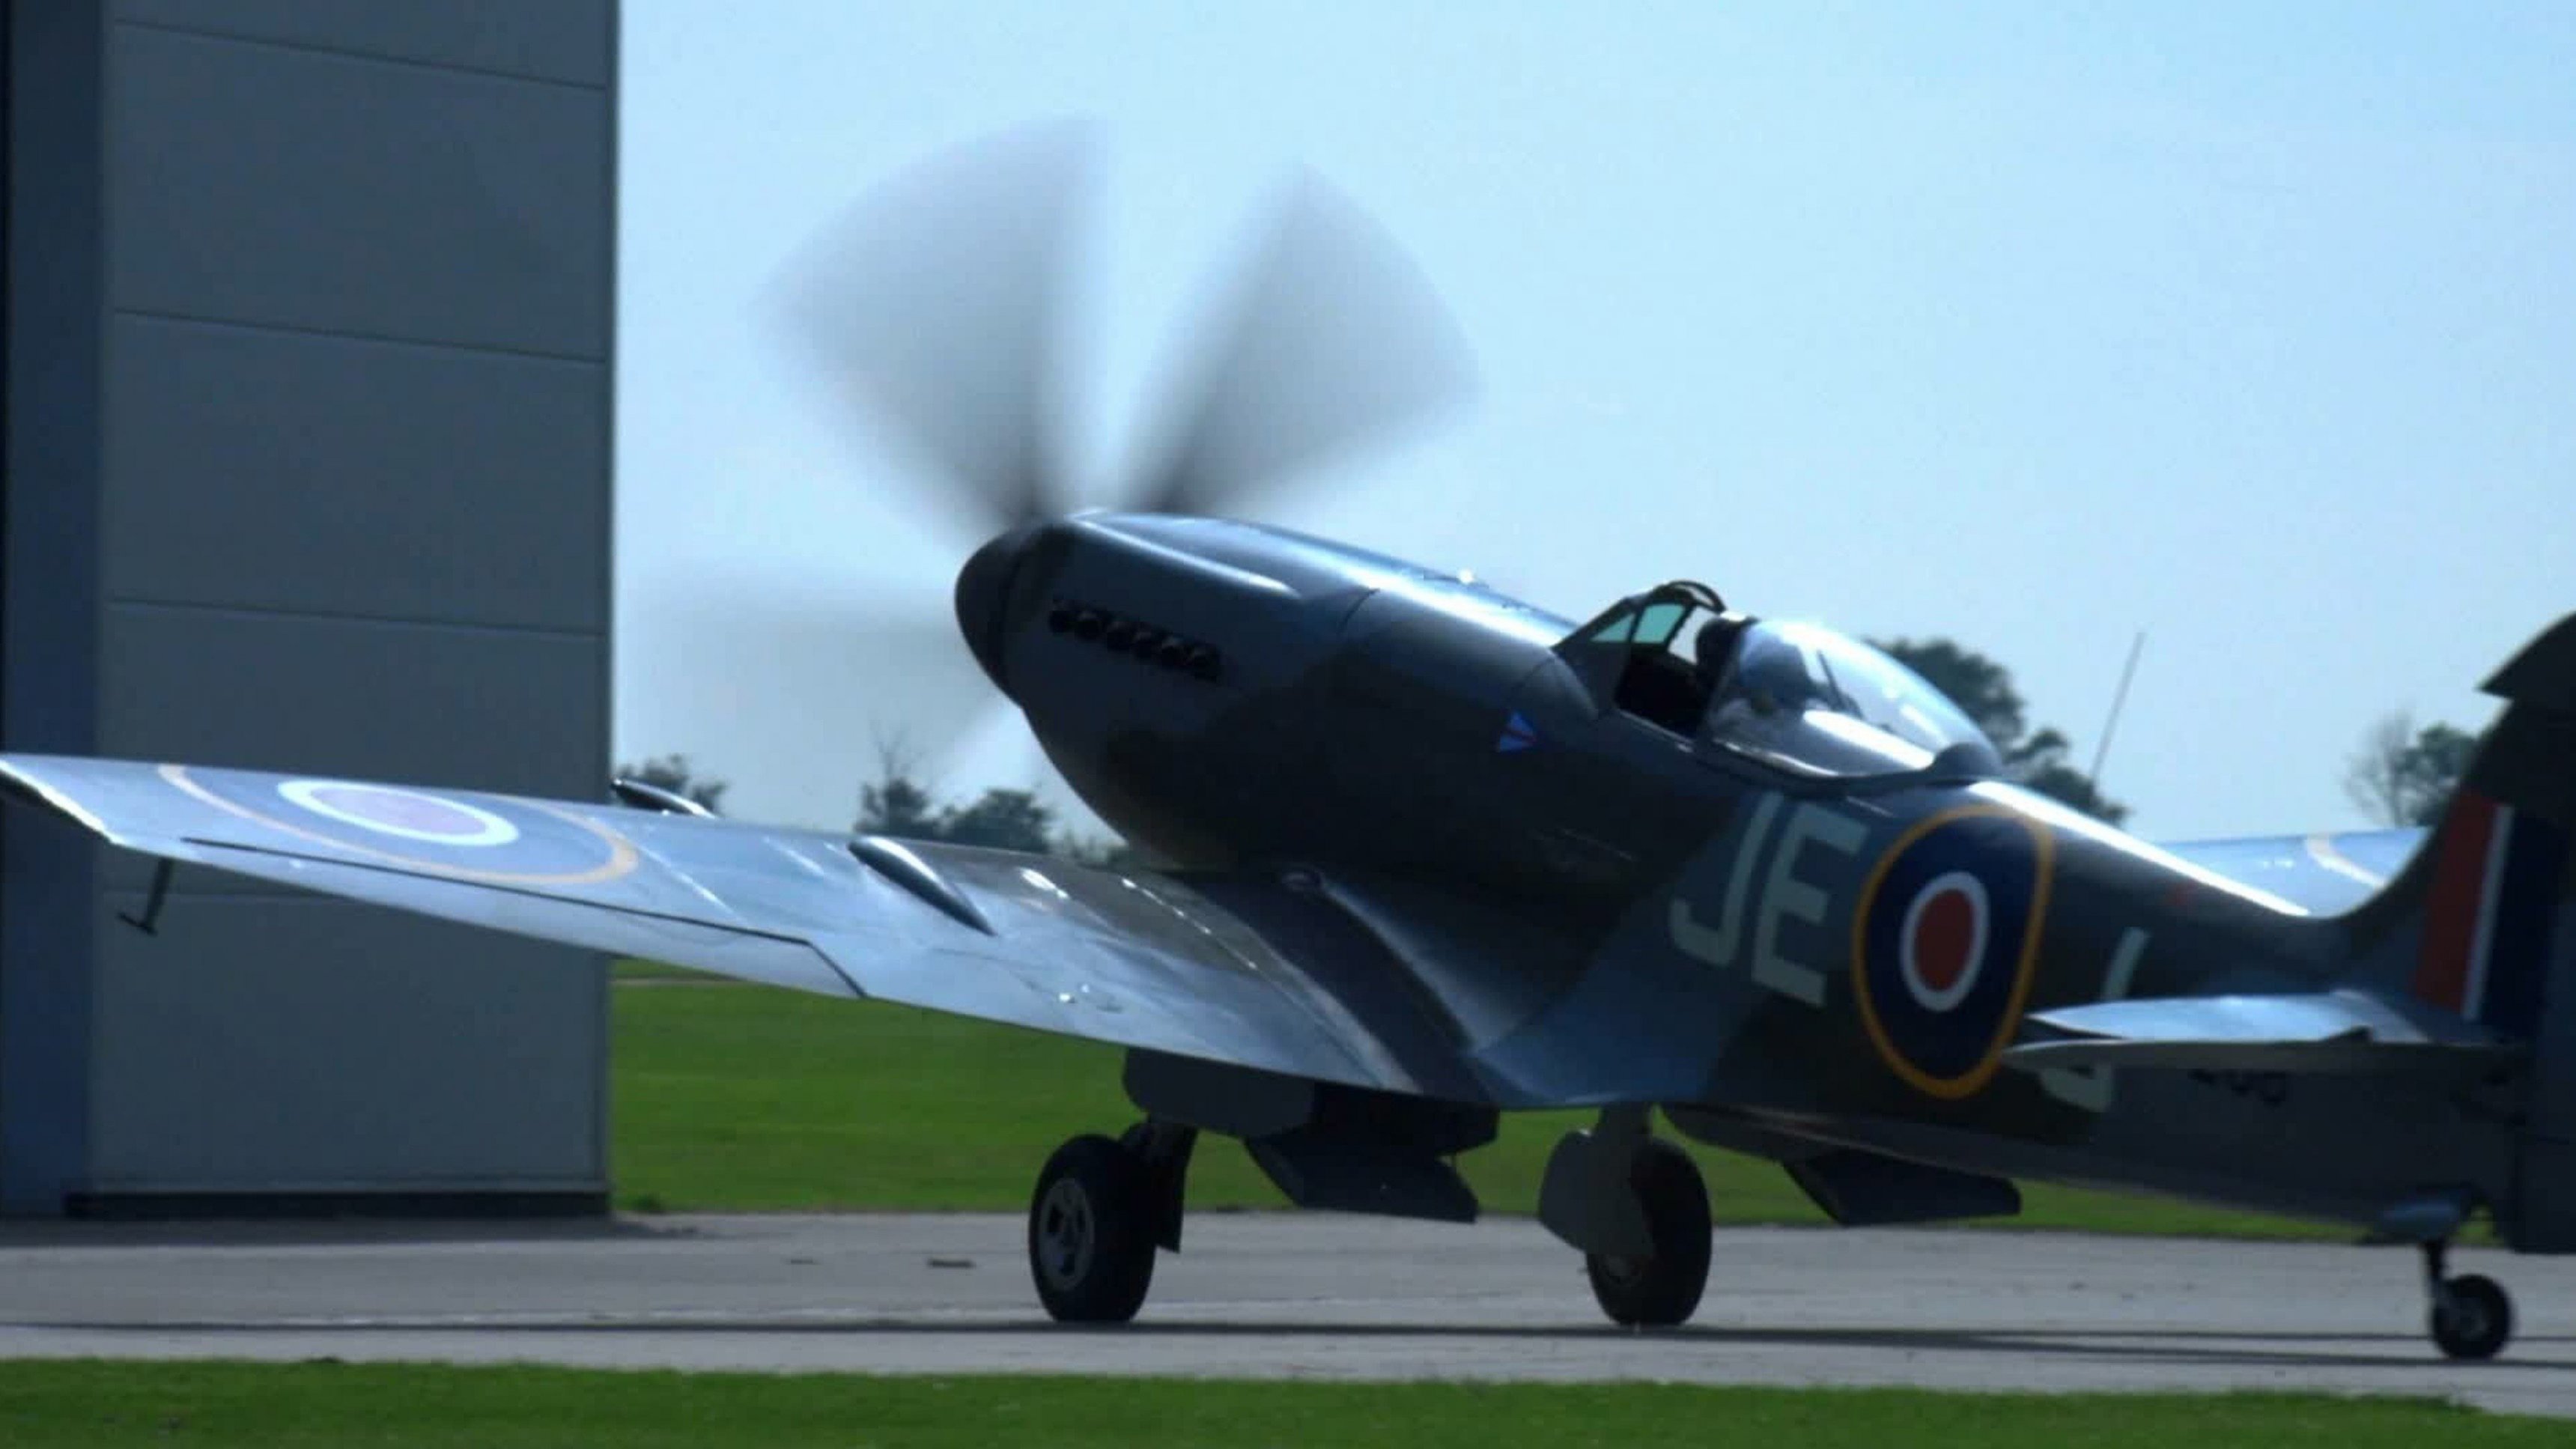 2. The Spitfire: A British Fighter Legend